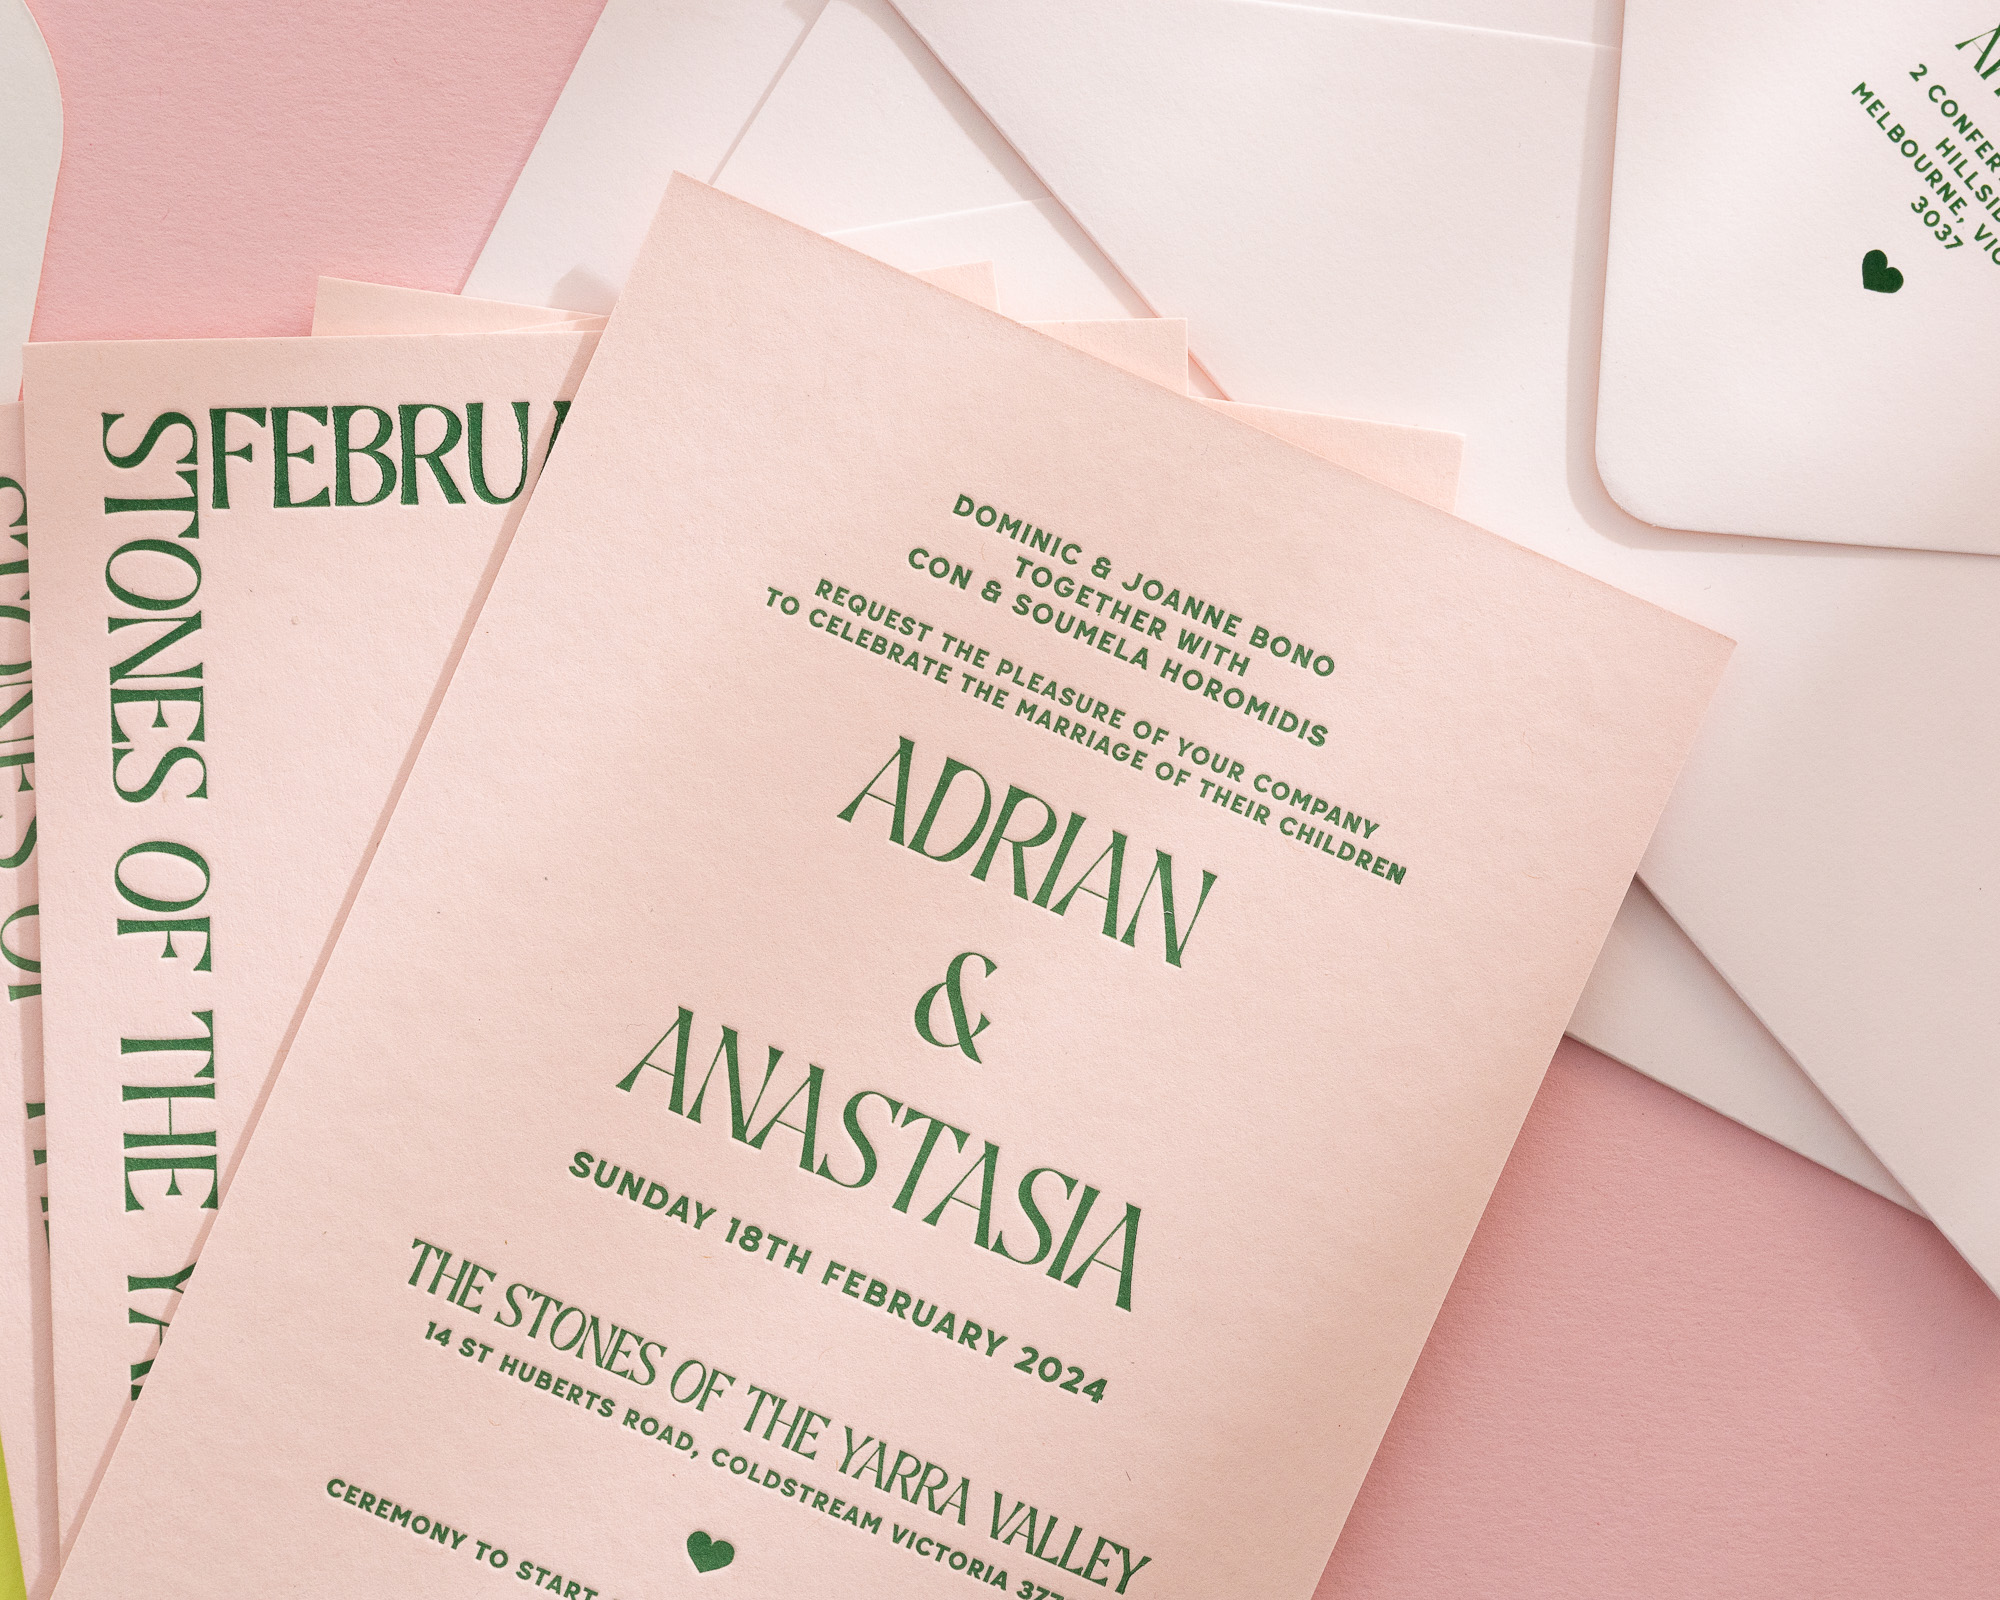 Adrian And Anastasia Letterpress Invitations 5